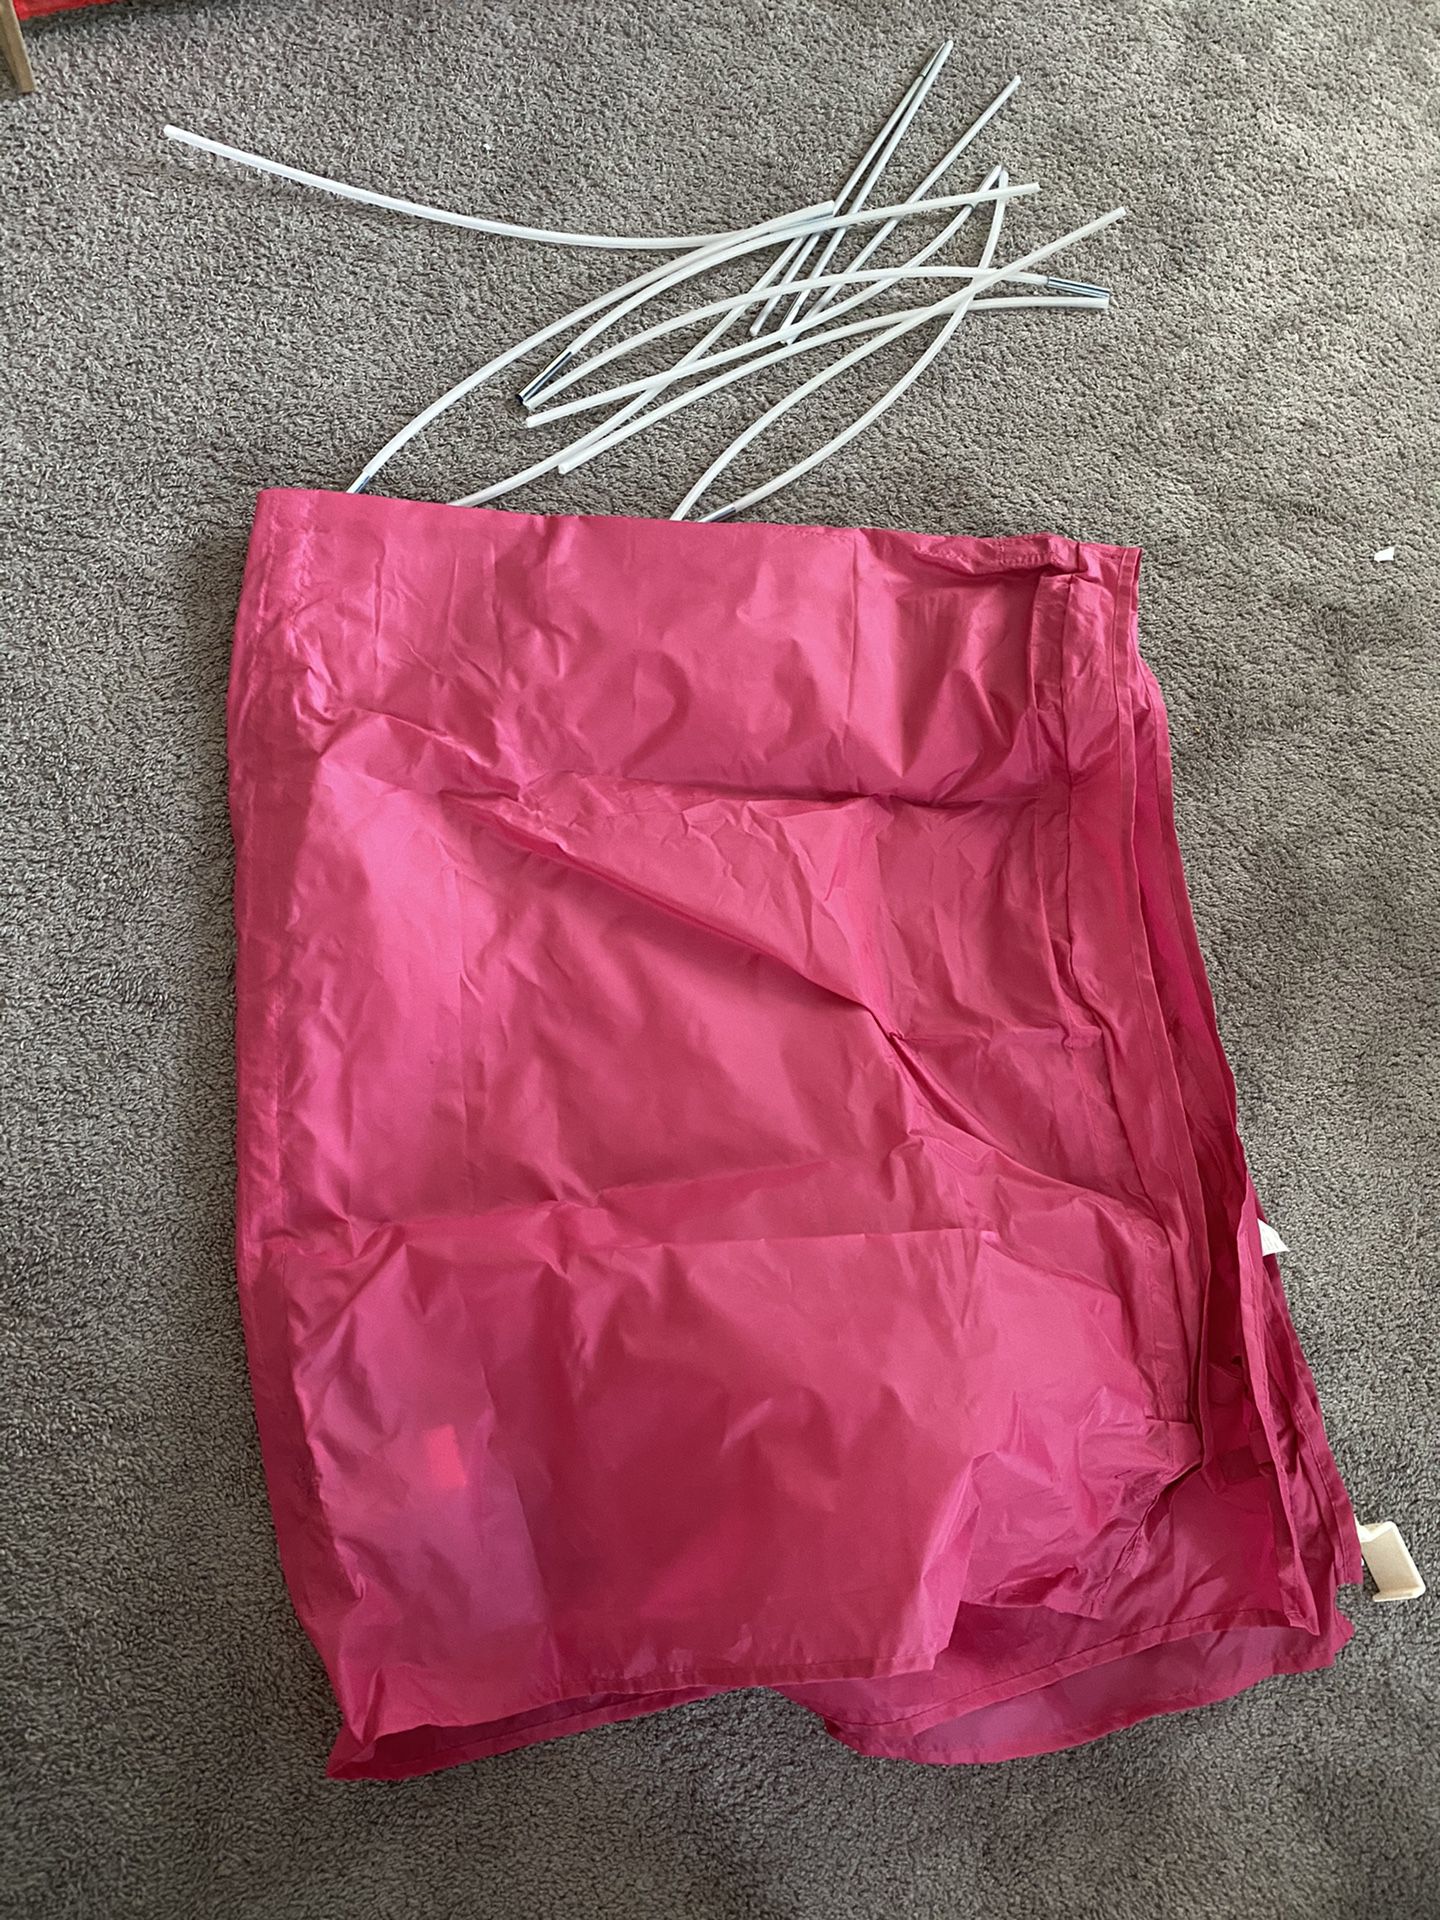 IKEA Pink Kura Tent